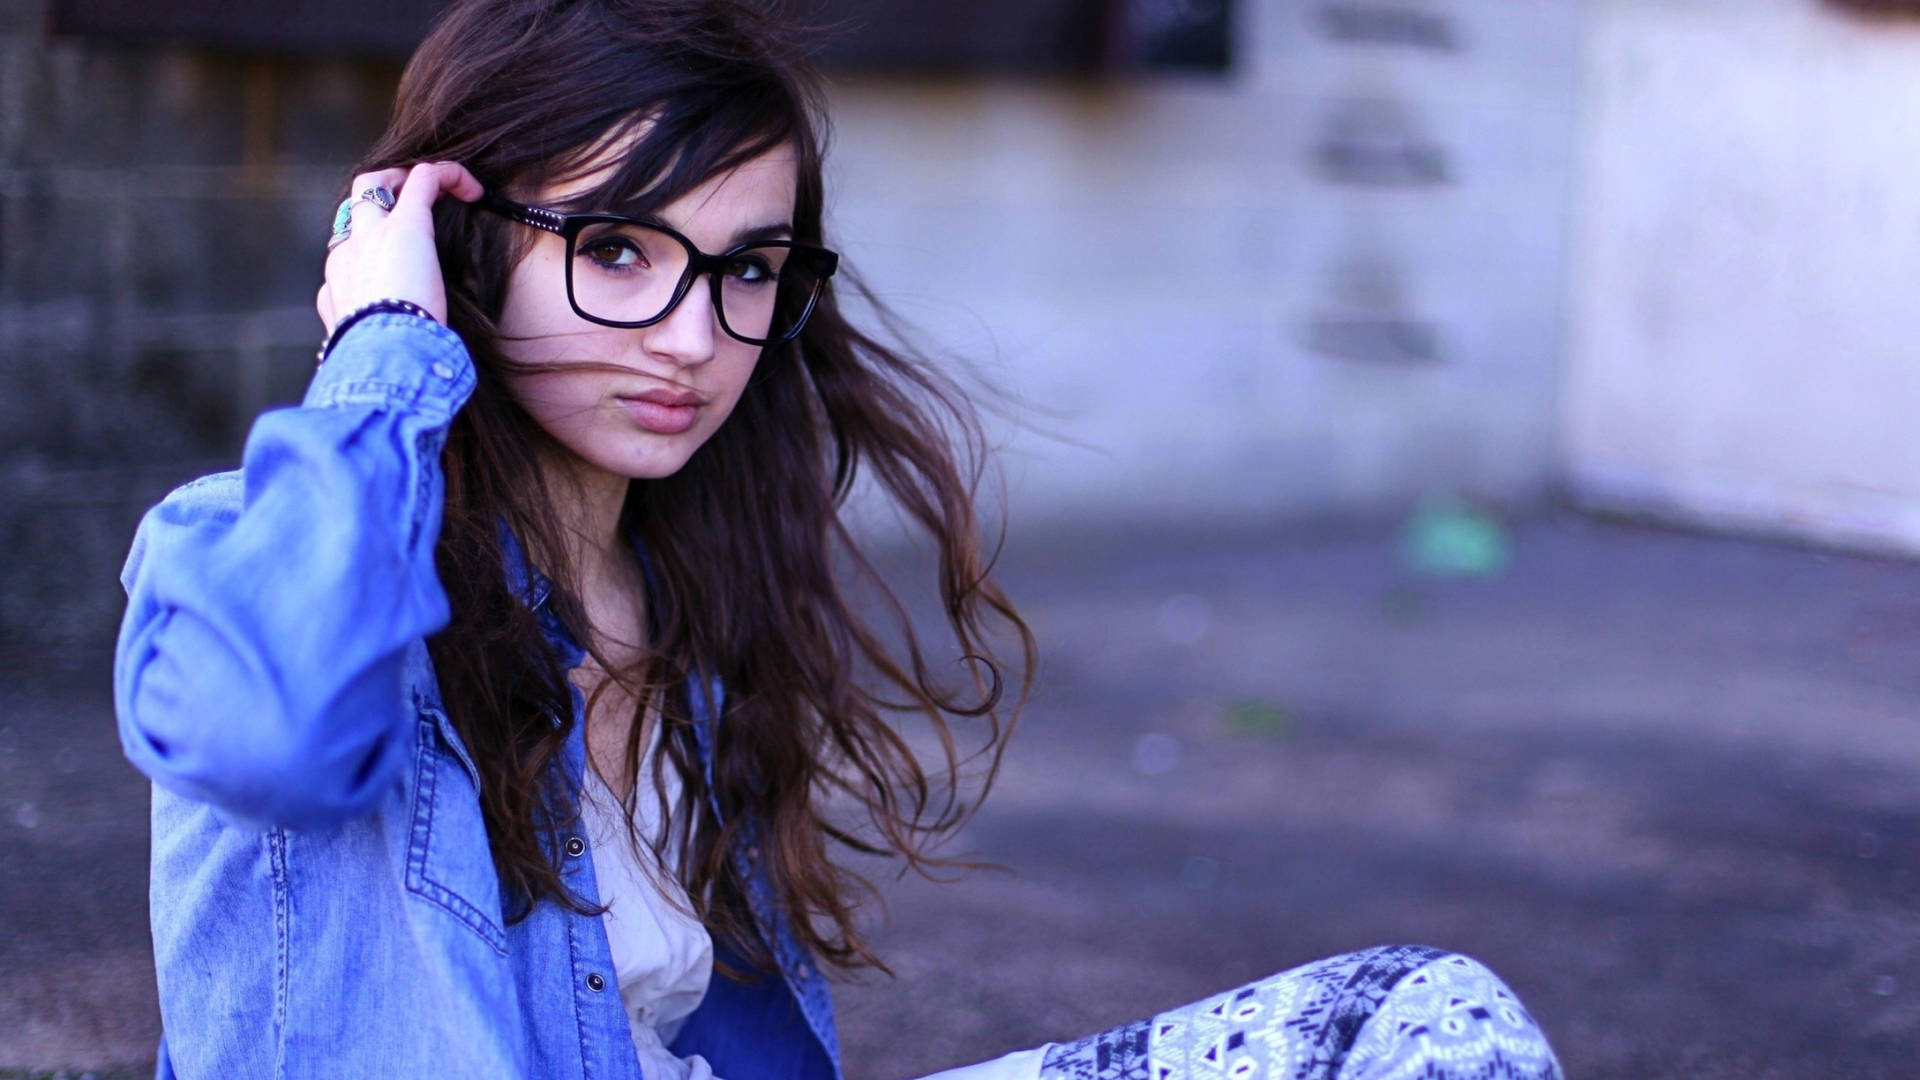 Cute Women With Glasses Moriah Pereira Background